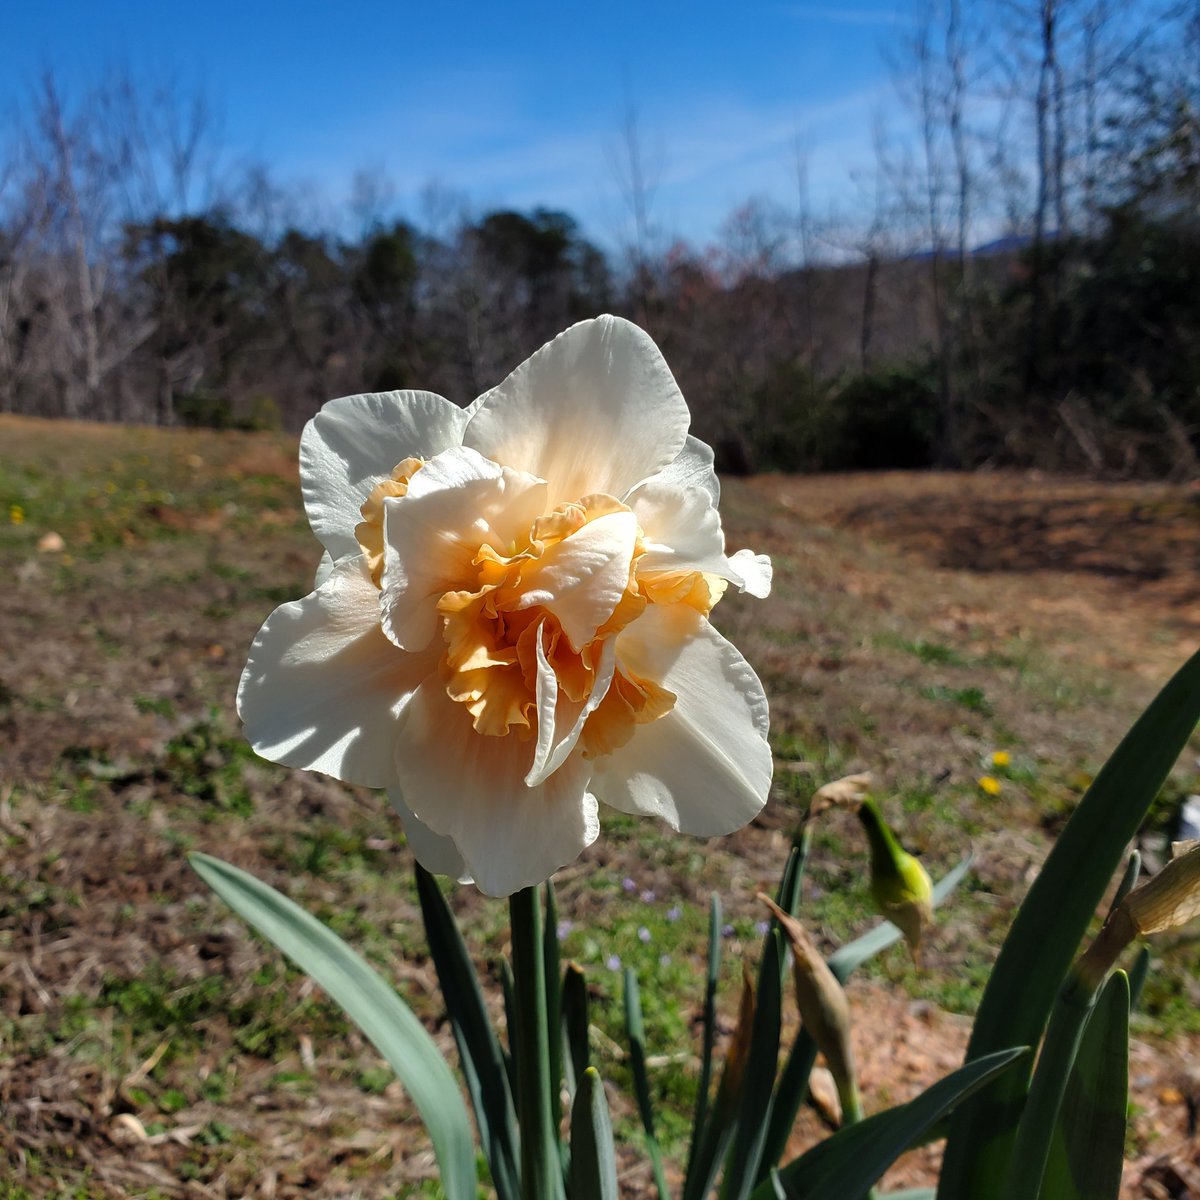 #Gardening #Flowers #GardnersWorld #Daffodil
#AlmostSpring